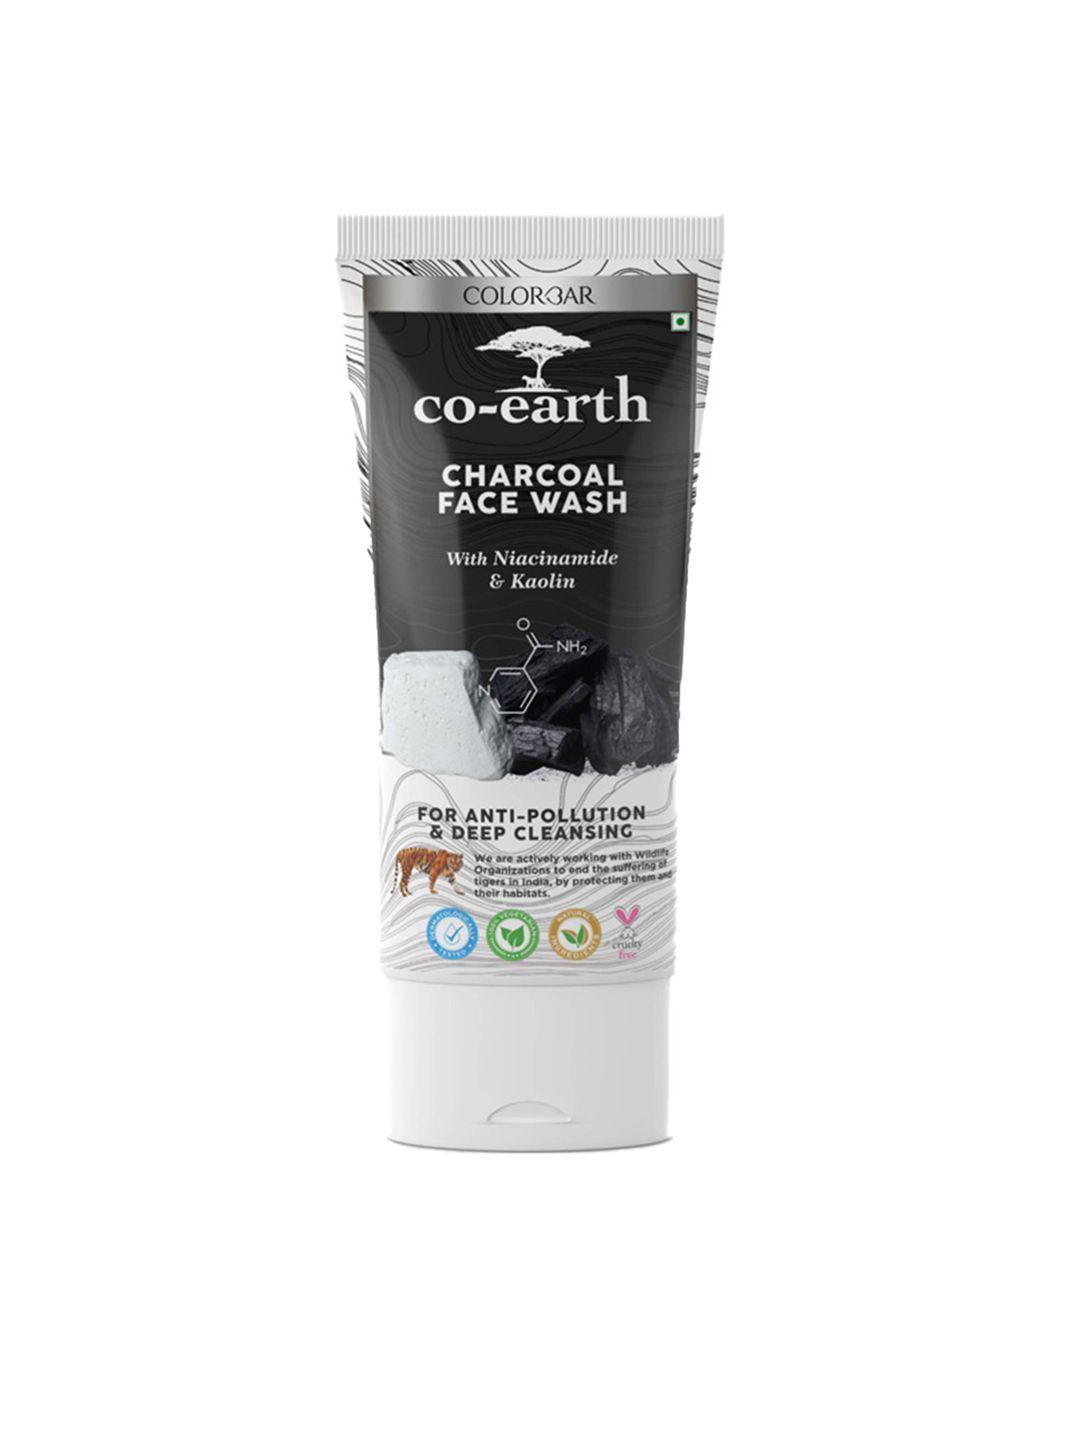 colorbar co-earth charcoal face scrub with vitamin e & kaolin clay - 100 g